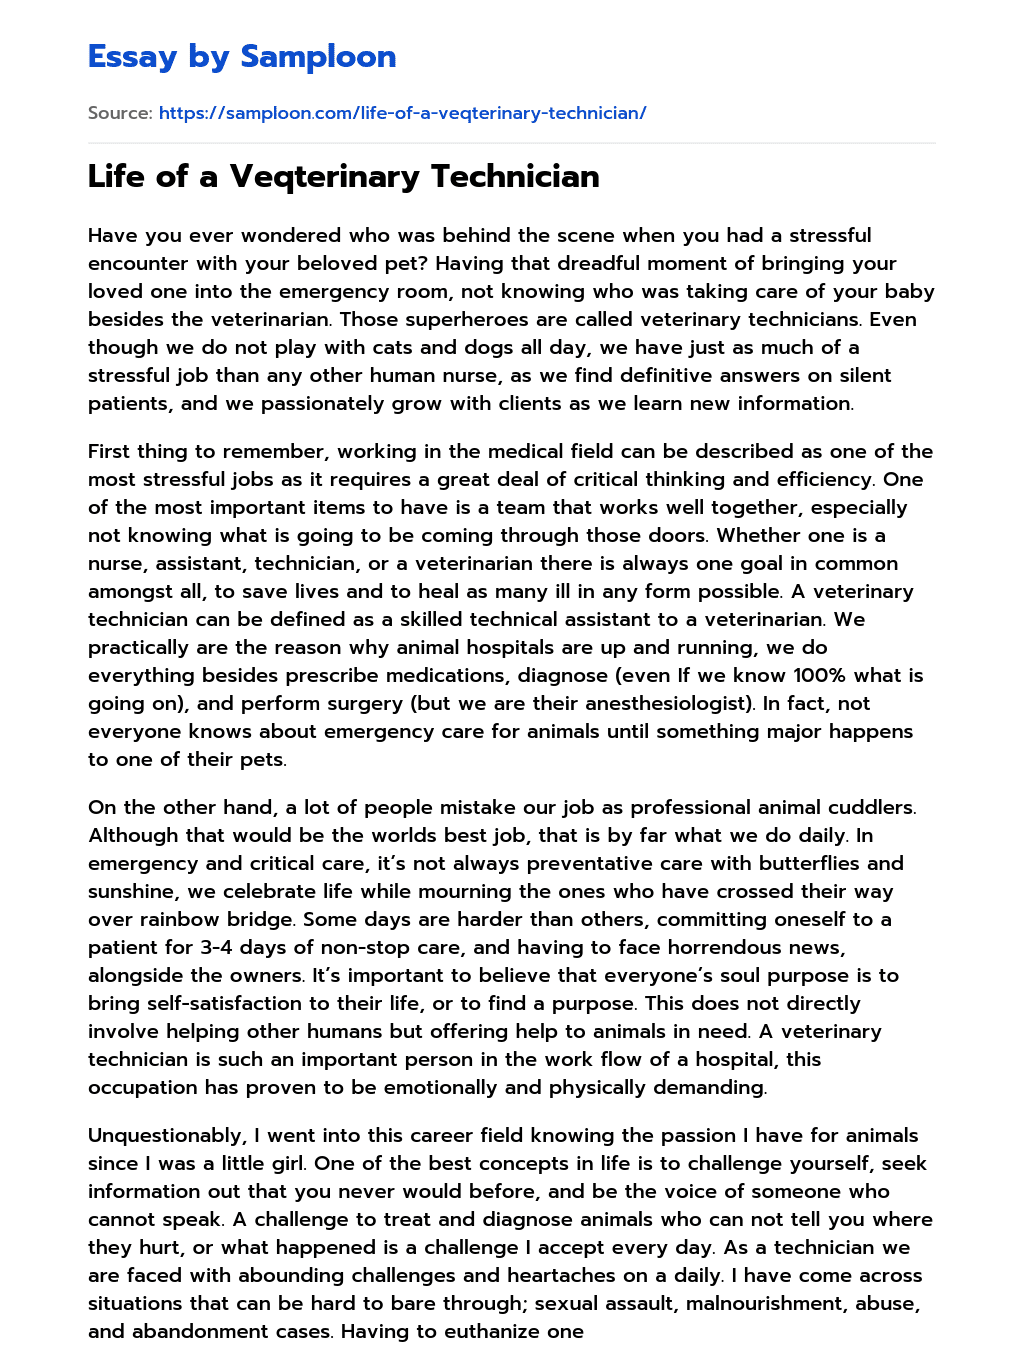 Life of a Veqterinary Technician essay